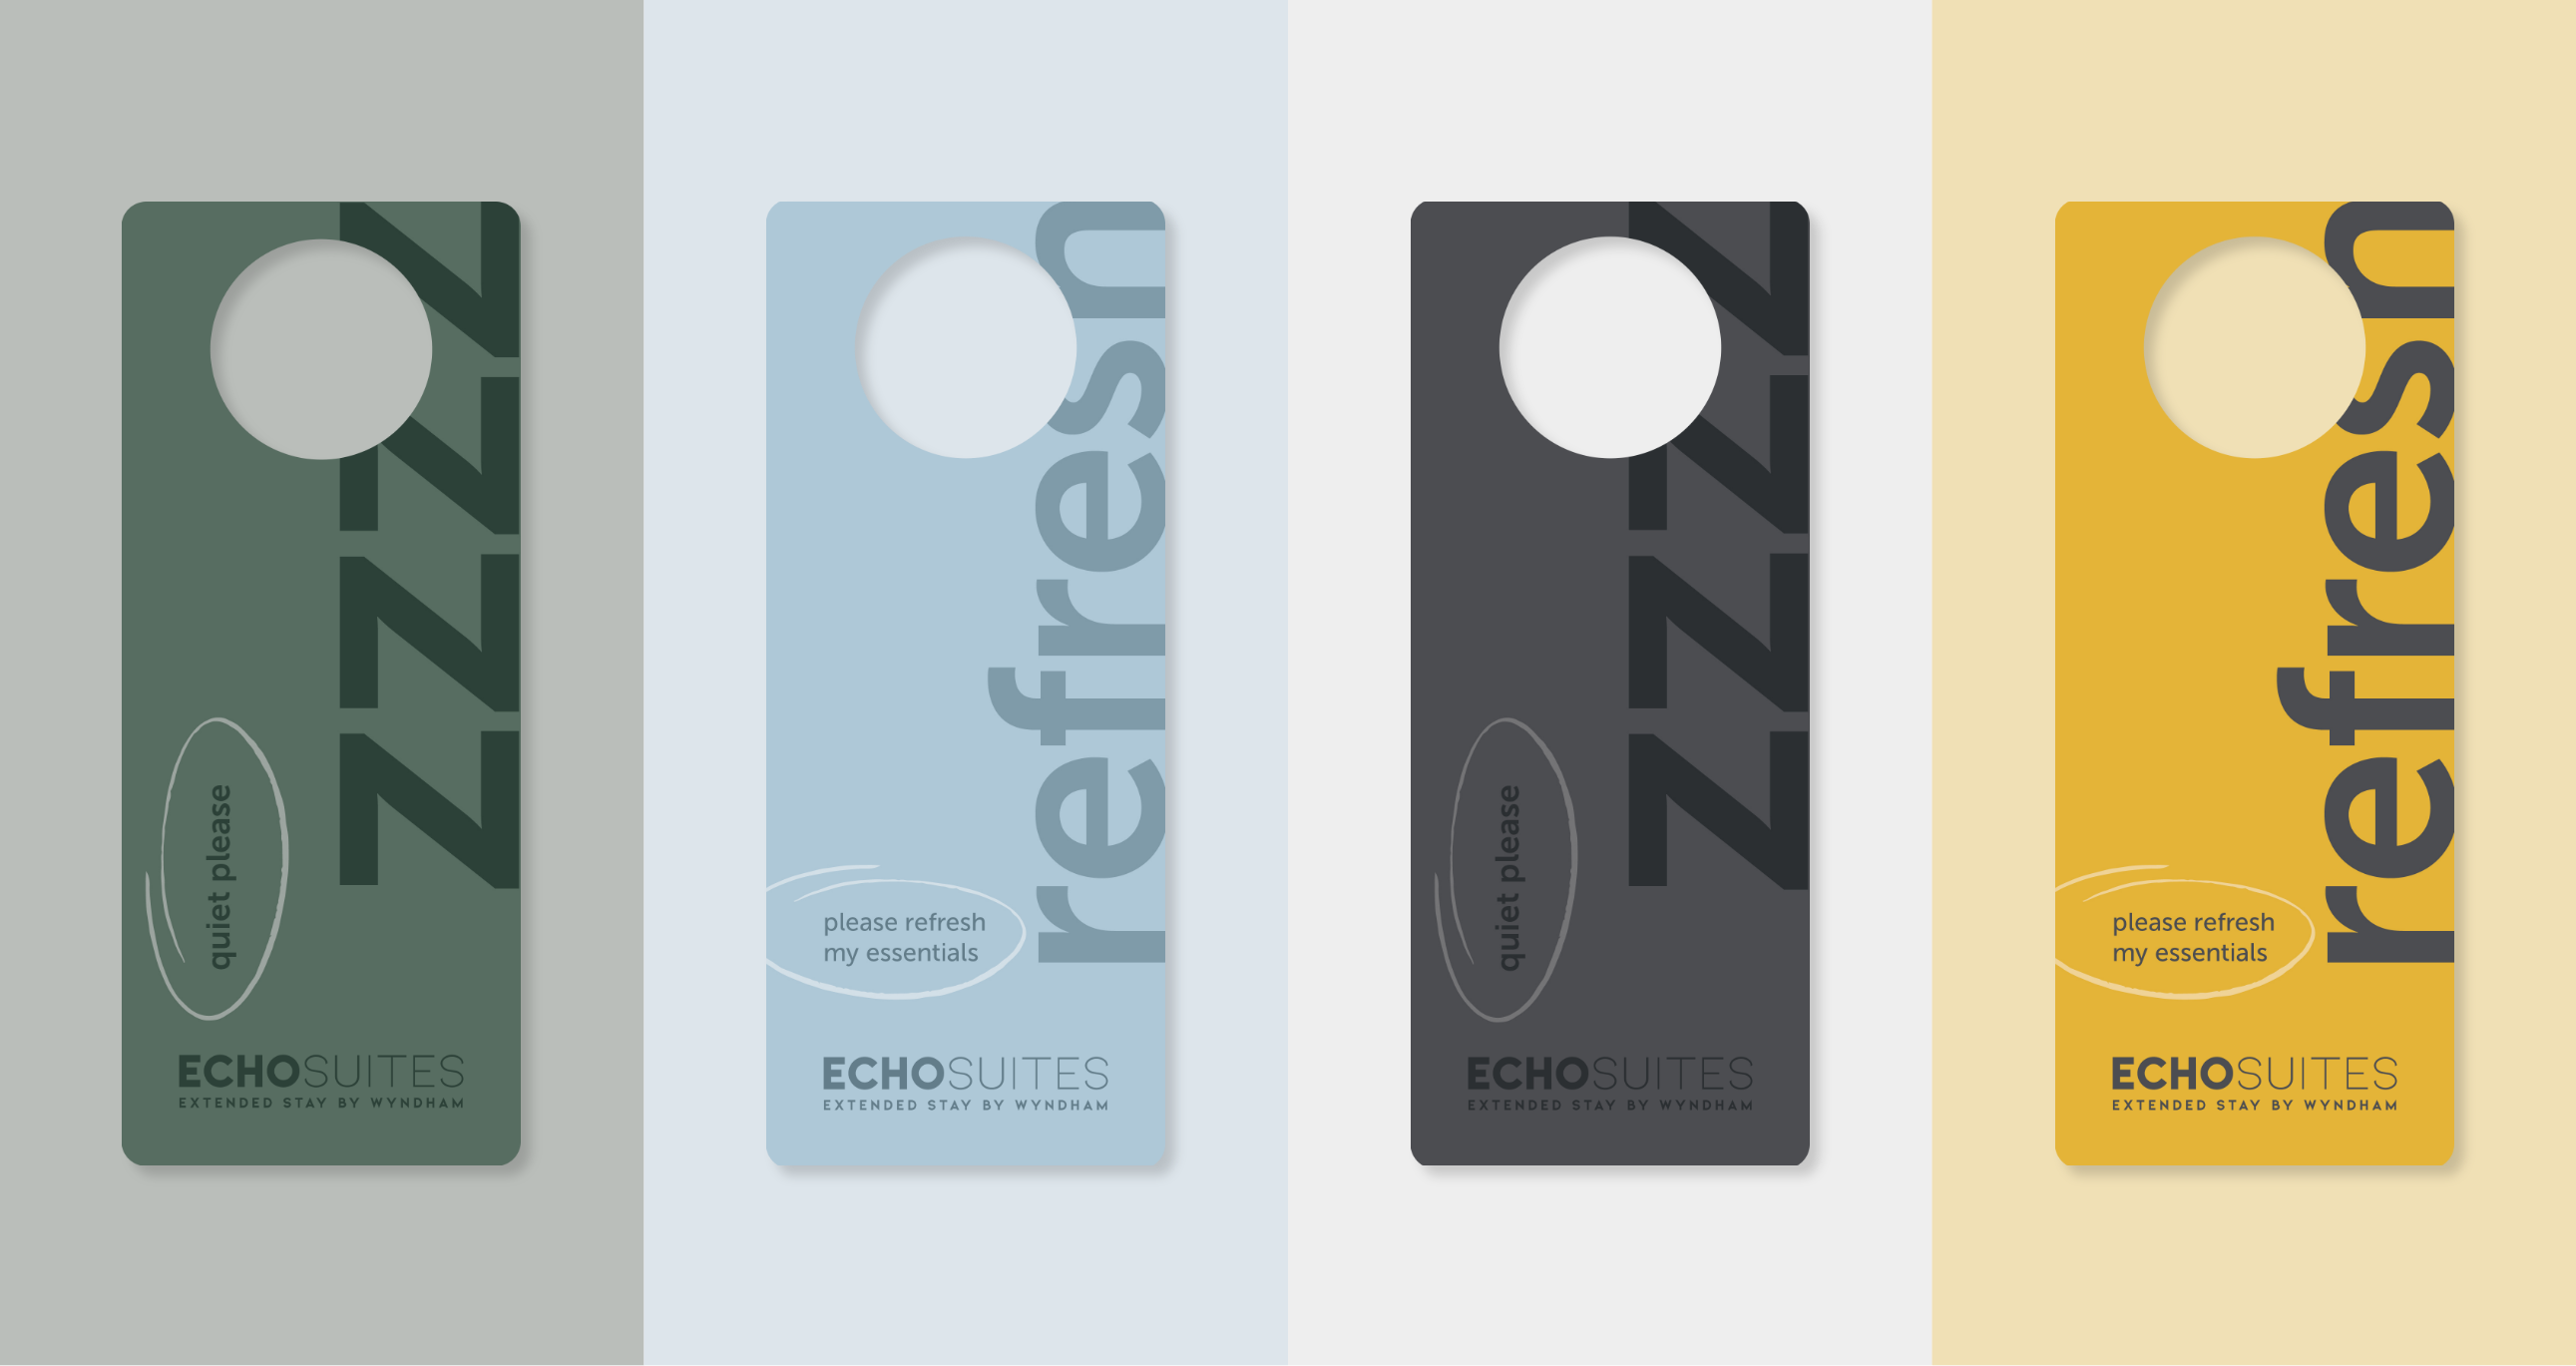 Echo Suites door knob tag mockups view